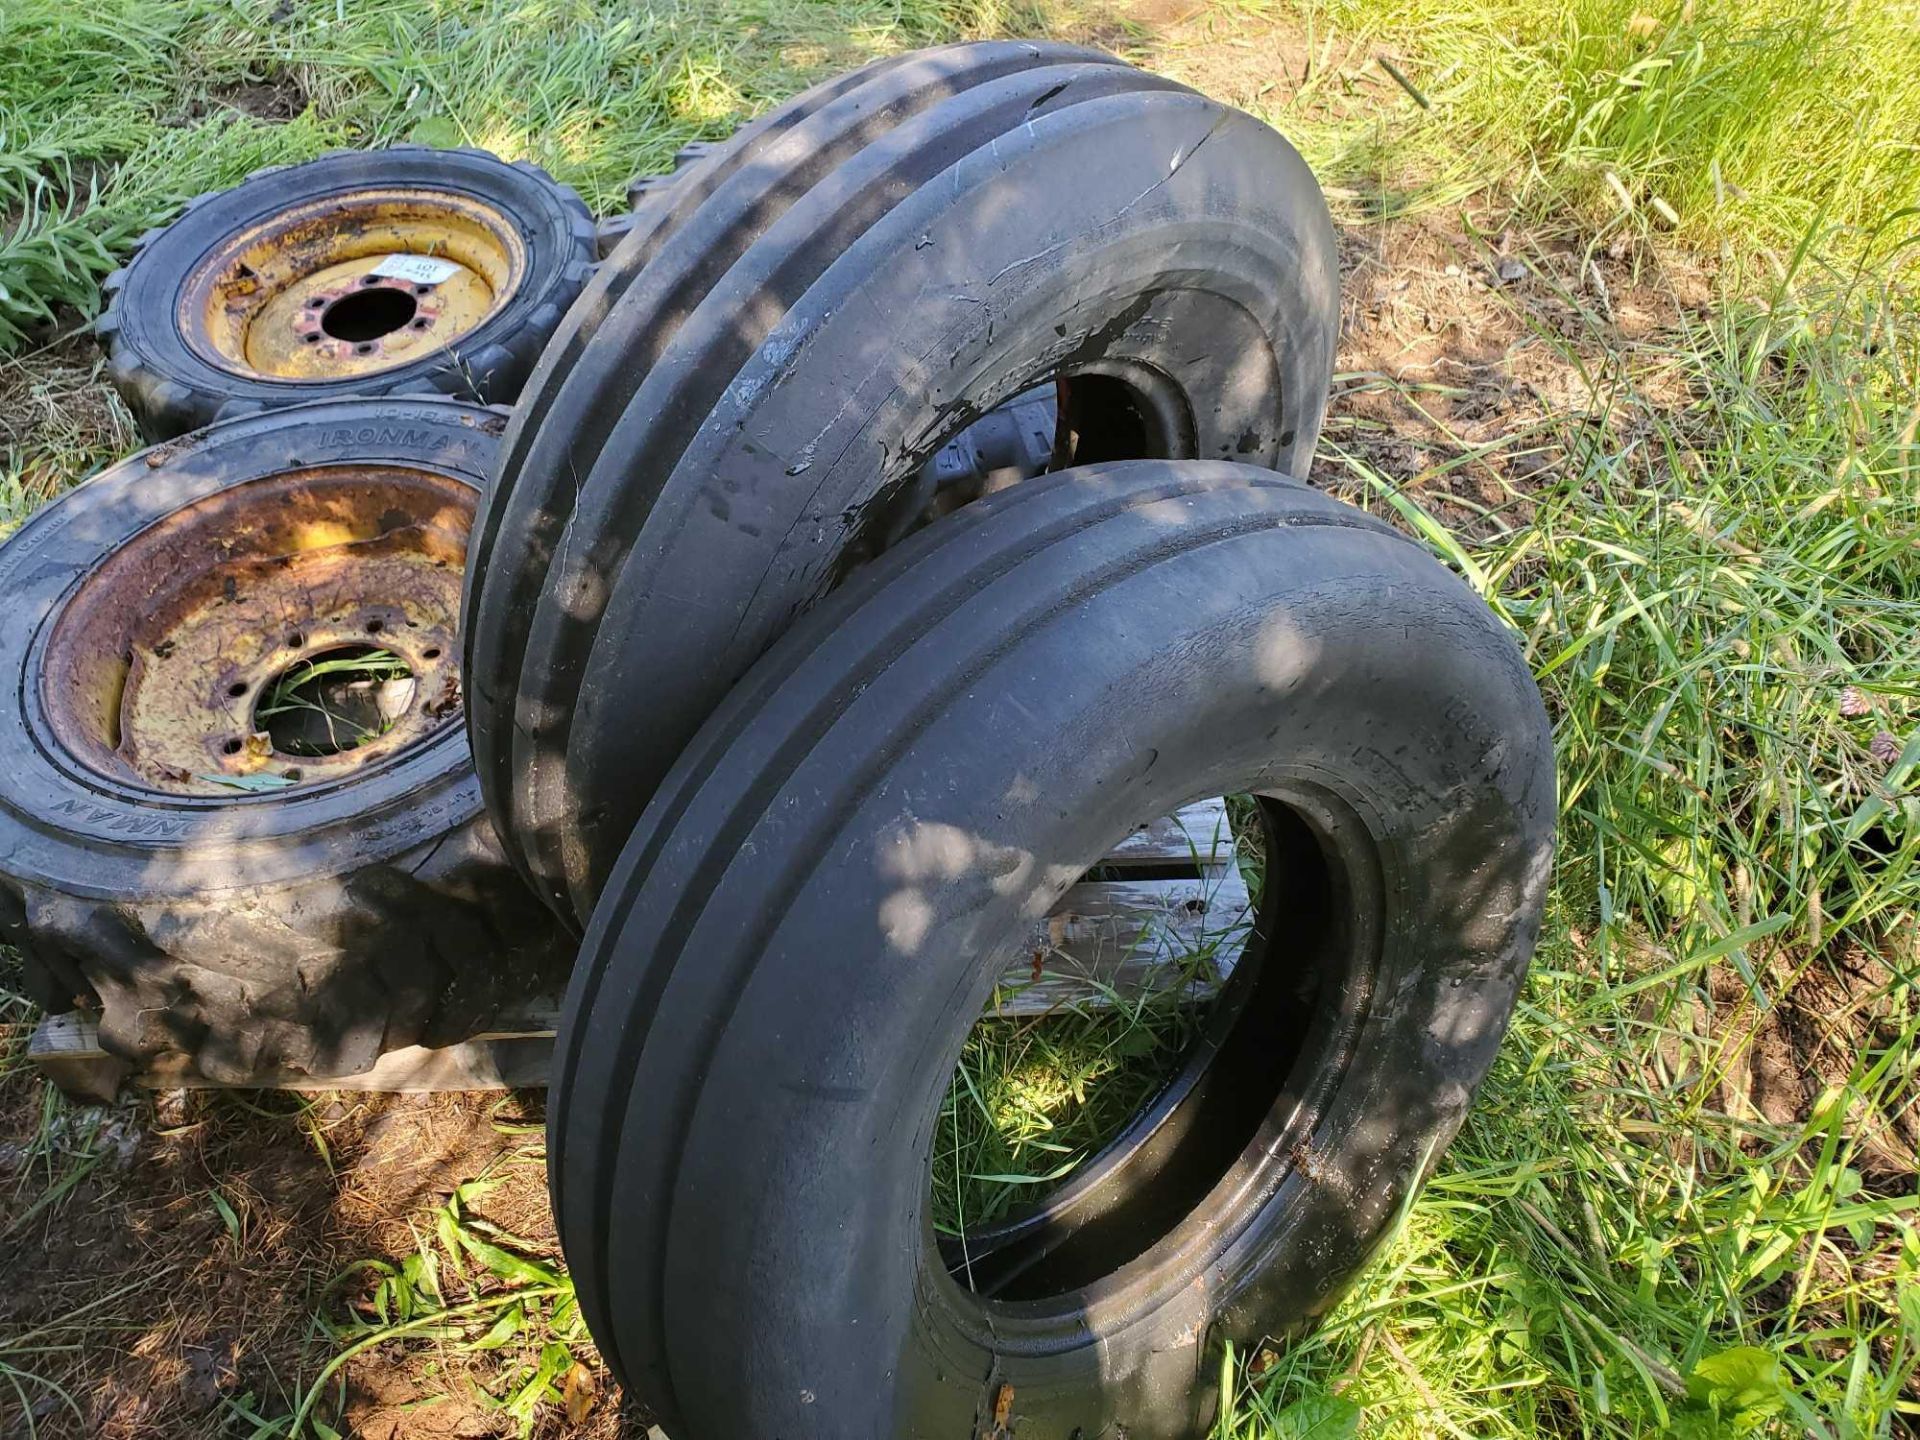 mixed tires / pneus melanges - Image 3 of 3